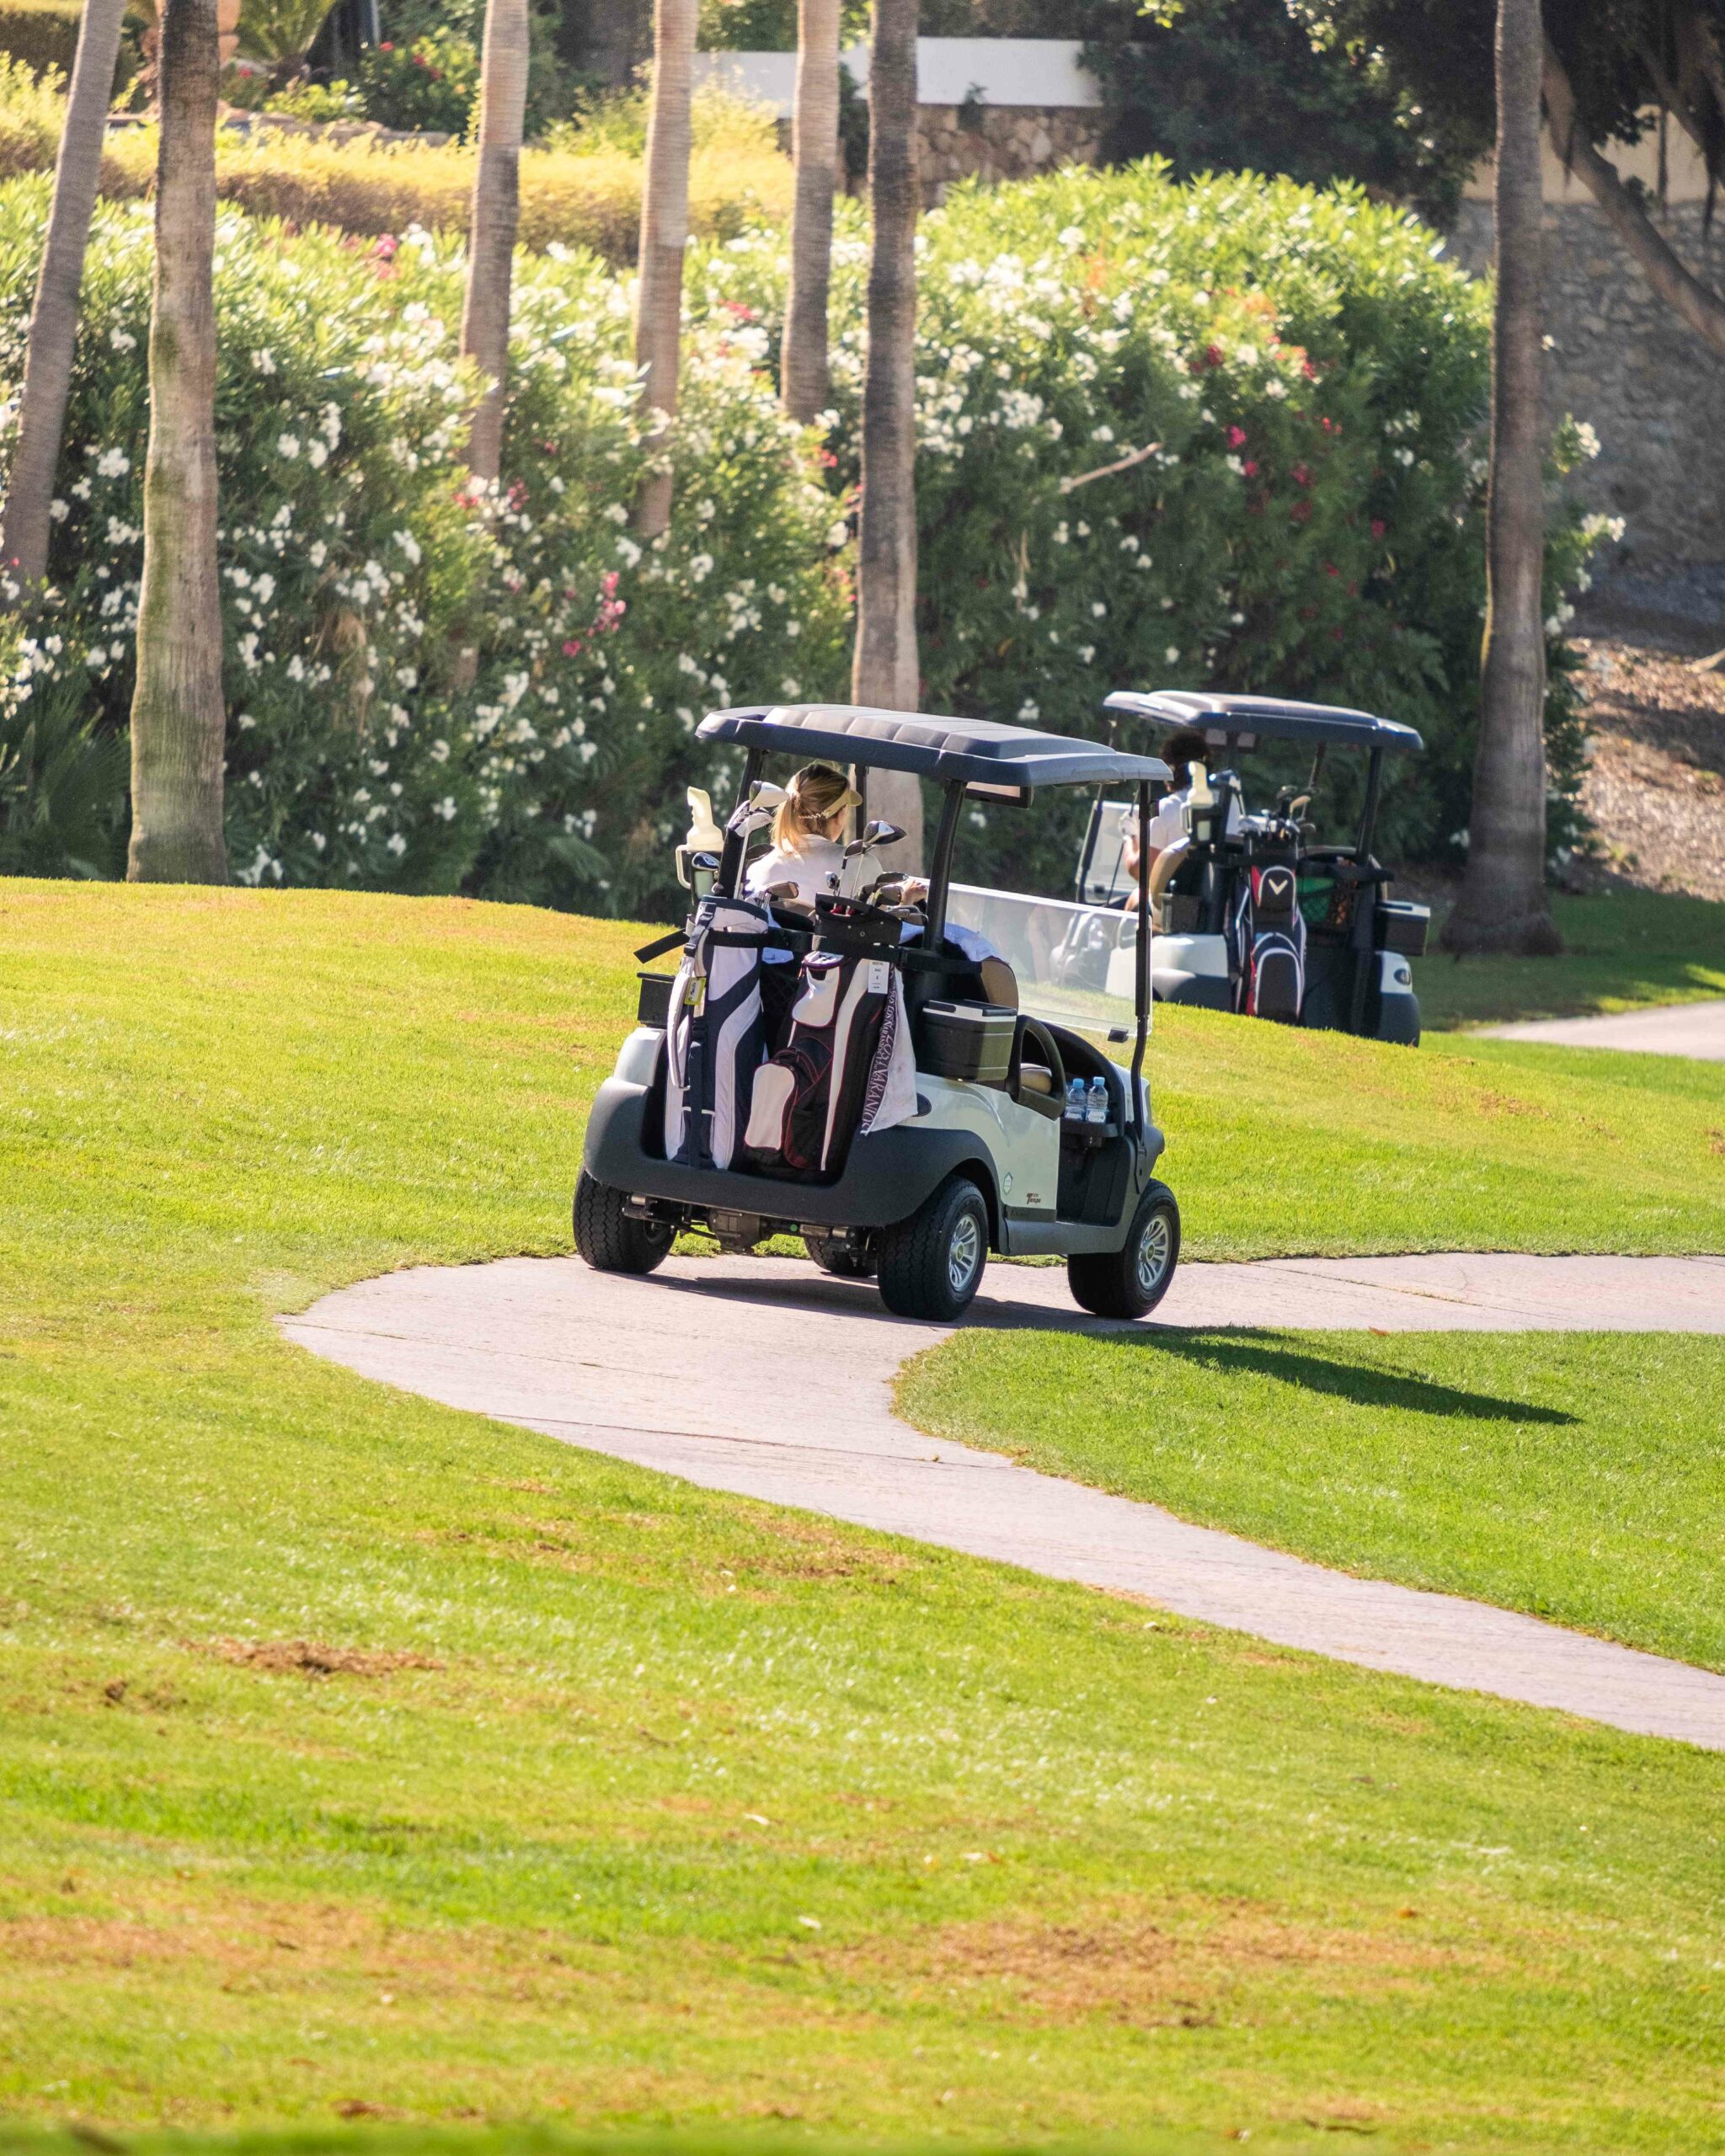 The Minimum Number of Clubs in Golf Bag - Costa Del Sol Golf Club